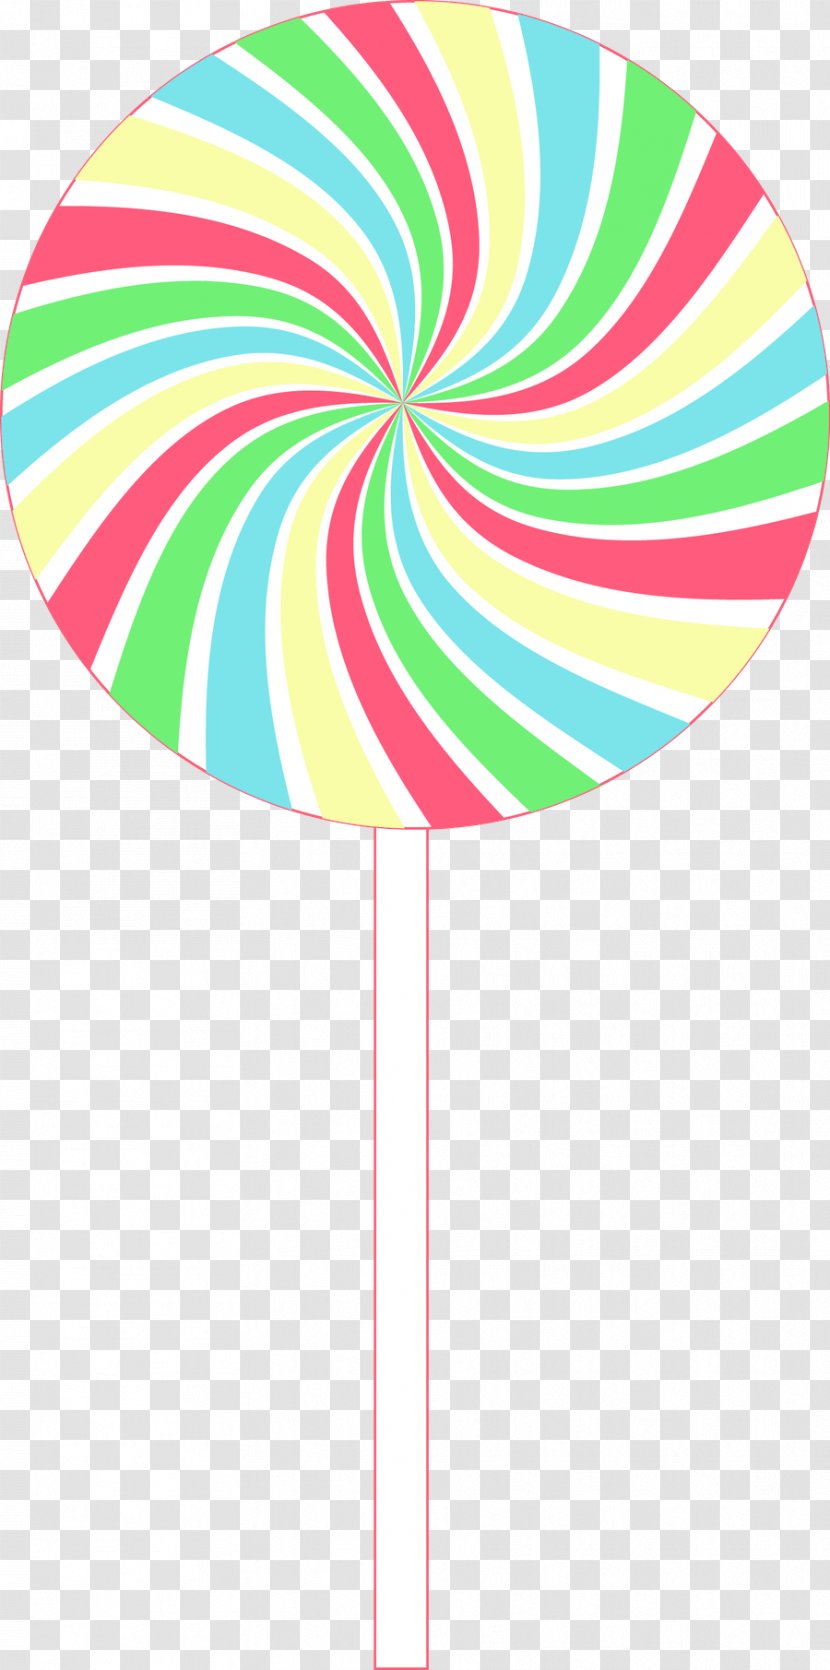 Candy Cane Lollipop Polkagris Stick Ribbon - Huhn Chow Mein Transparent PNG